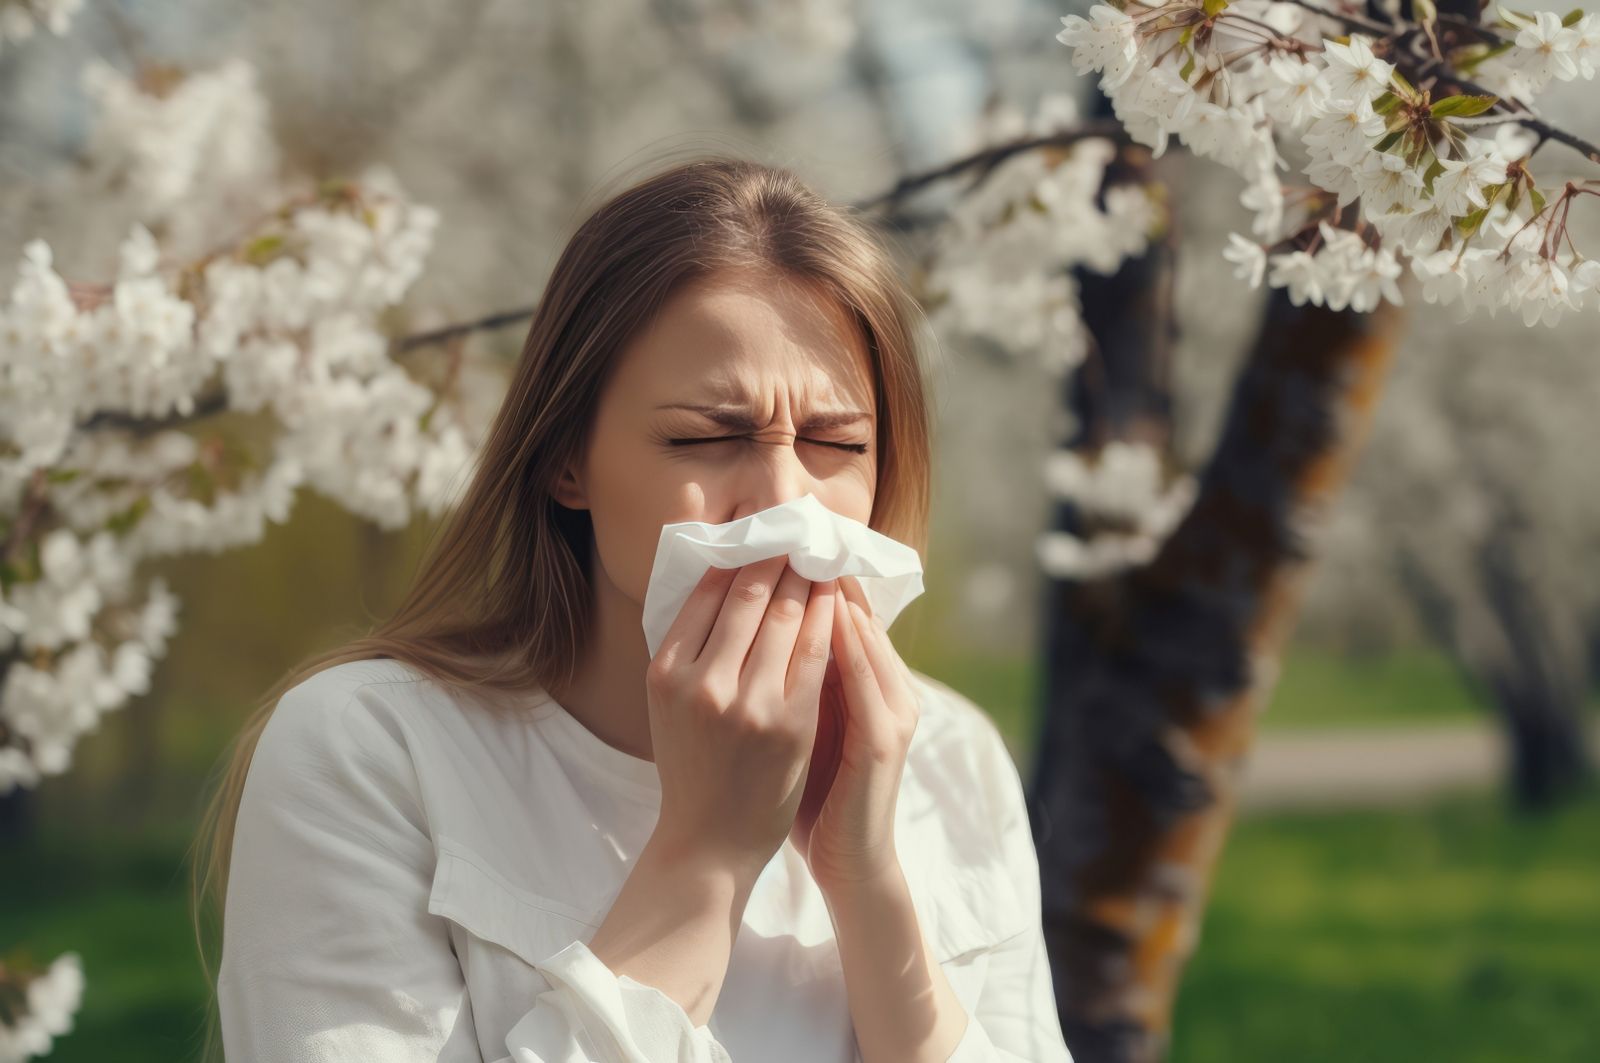 symptom-pollen-allergy-woman-summer-park-outside-walk-generate-ai_1600x1063.jpg